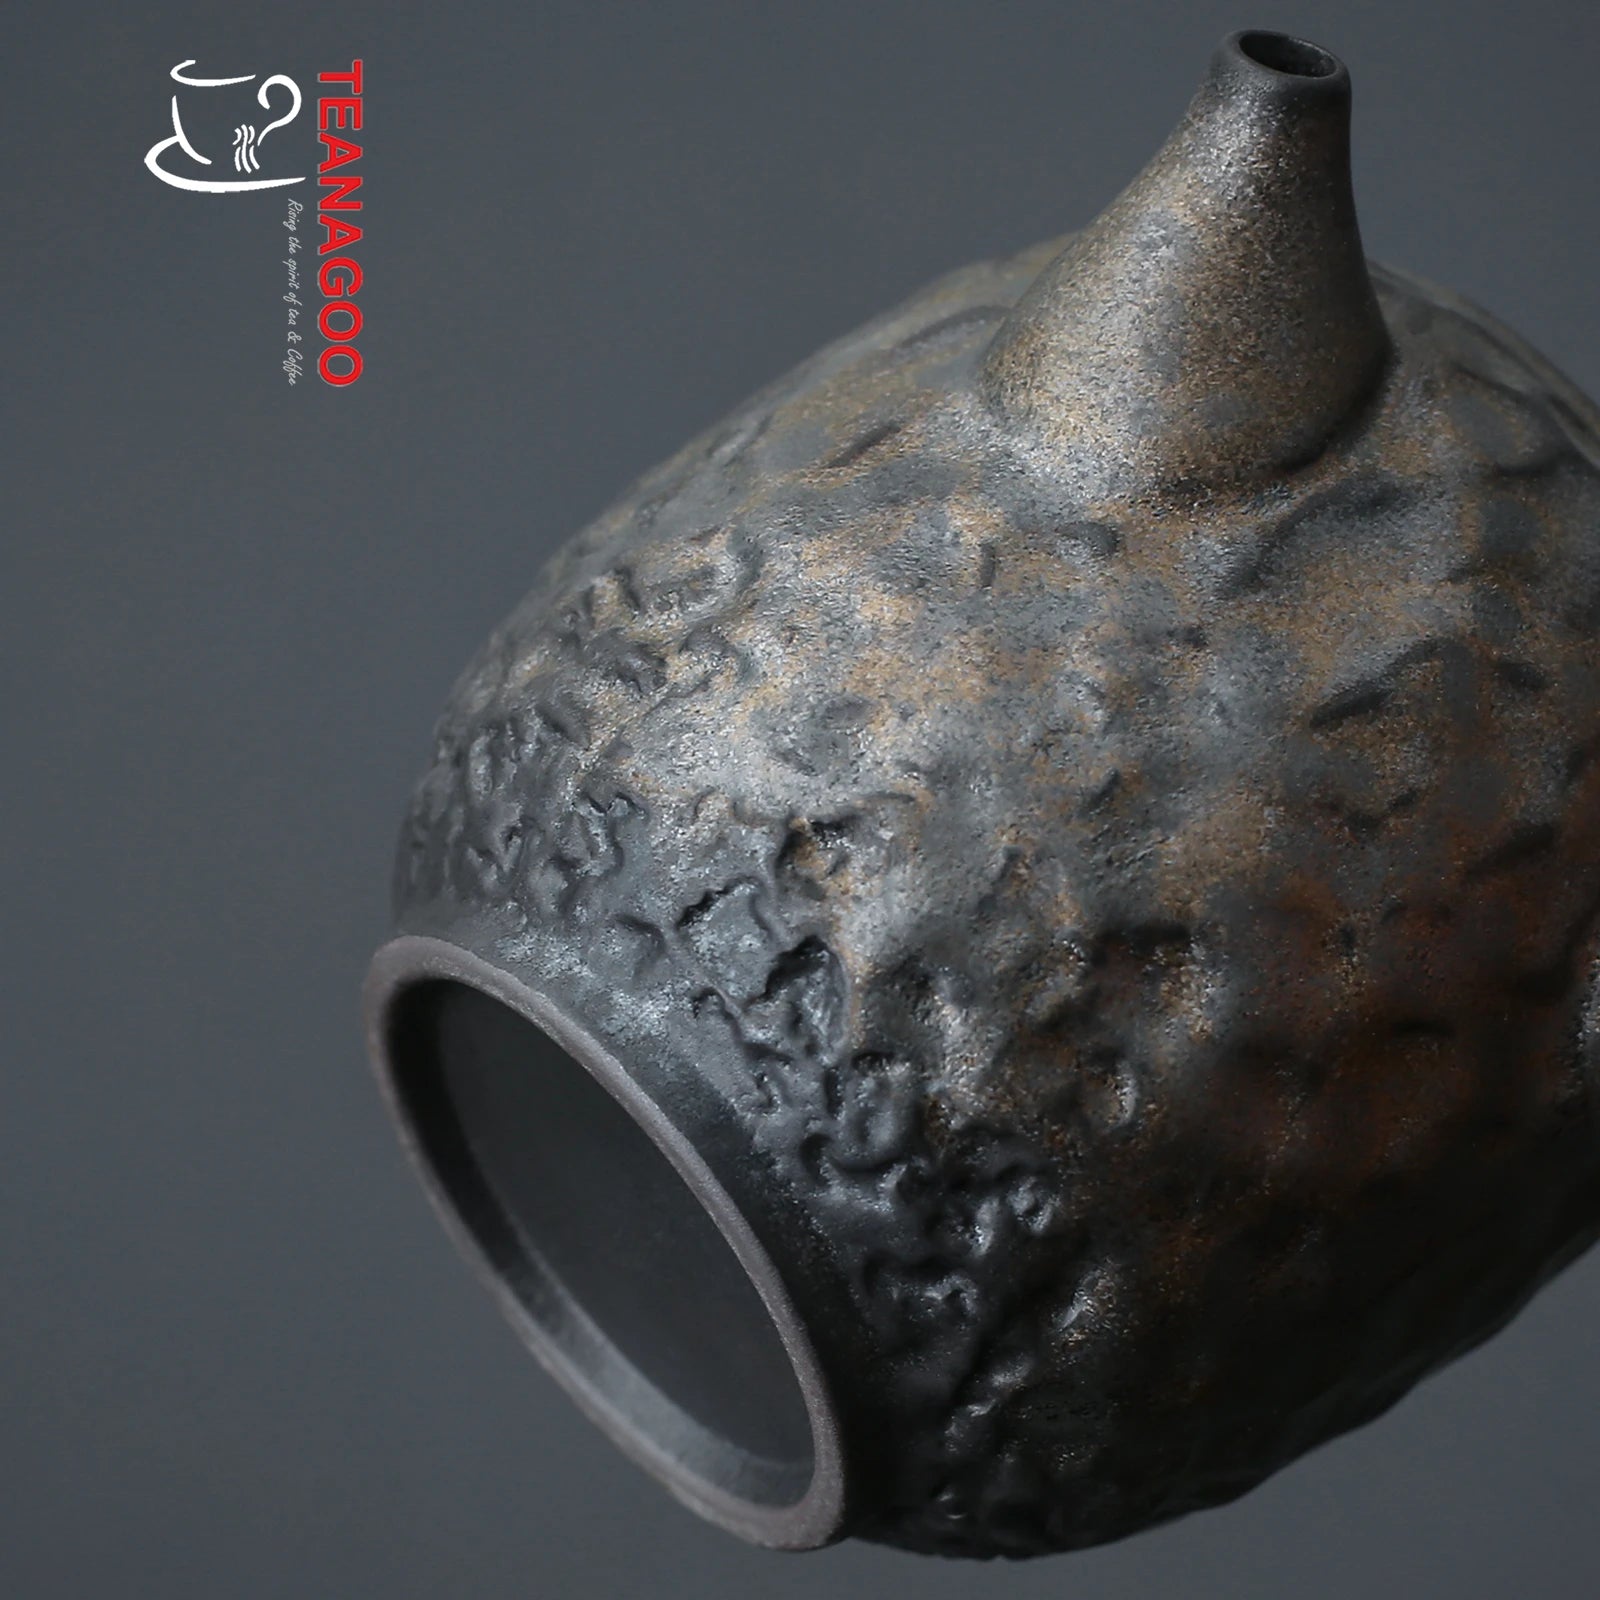 Kiln Changeable Ceramic Gilt Iron Glaze Teapot with Handle Handmade Tea ware